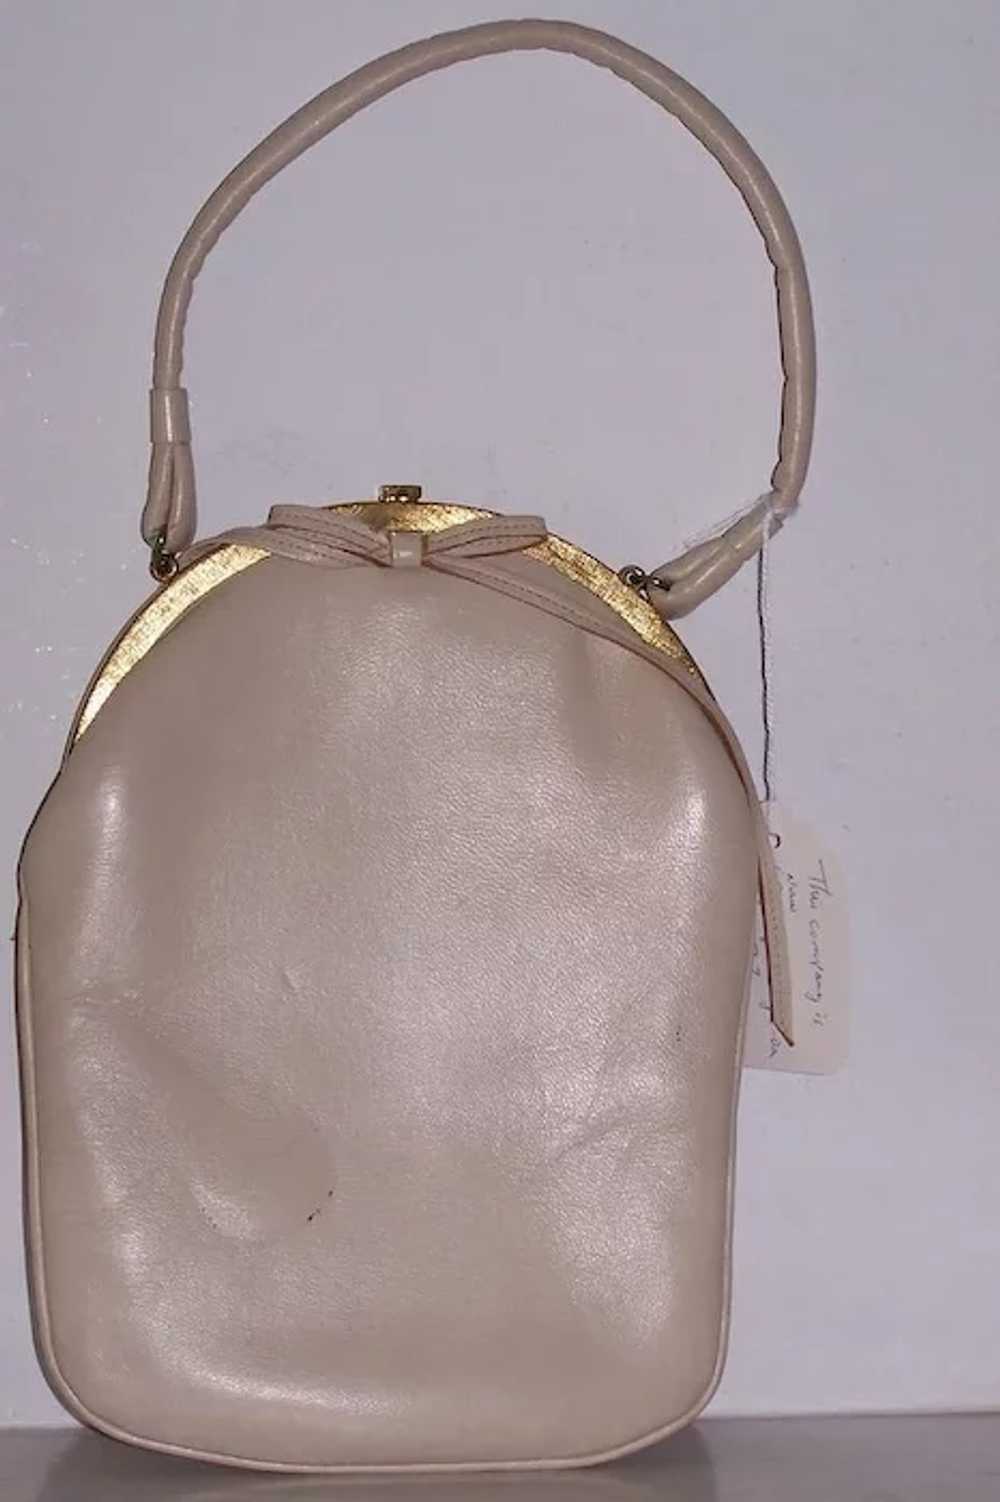 Bagcraft of London leather handbag circa 1949 - image 1